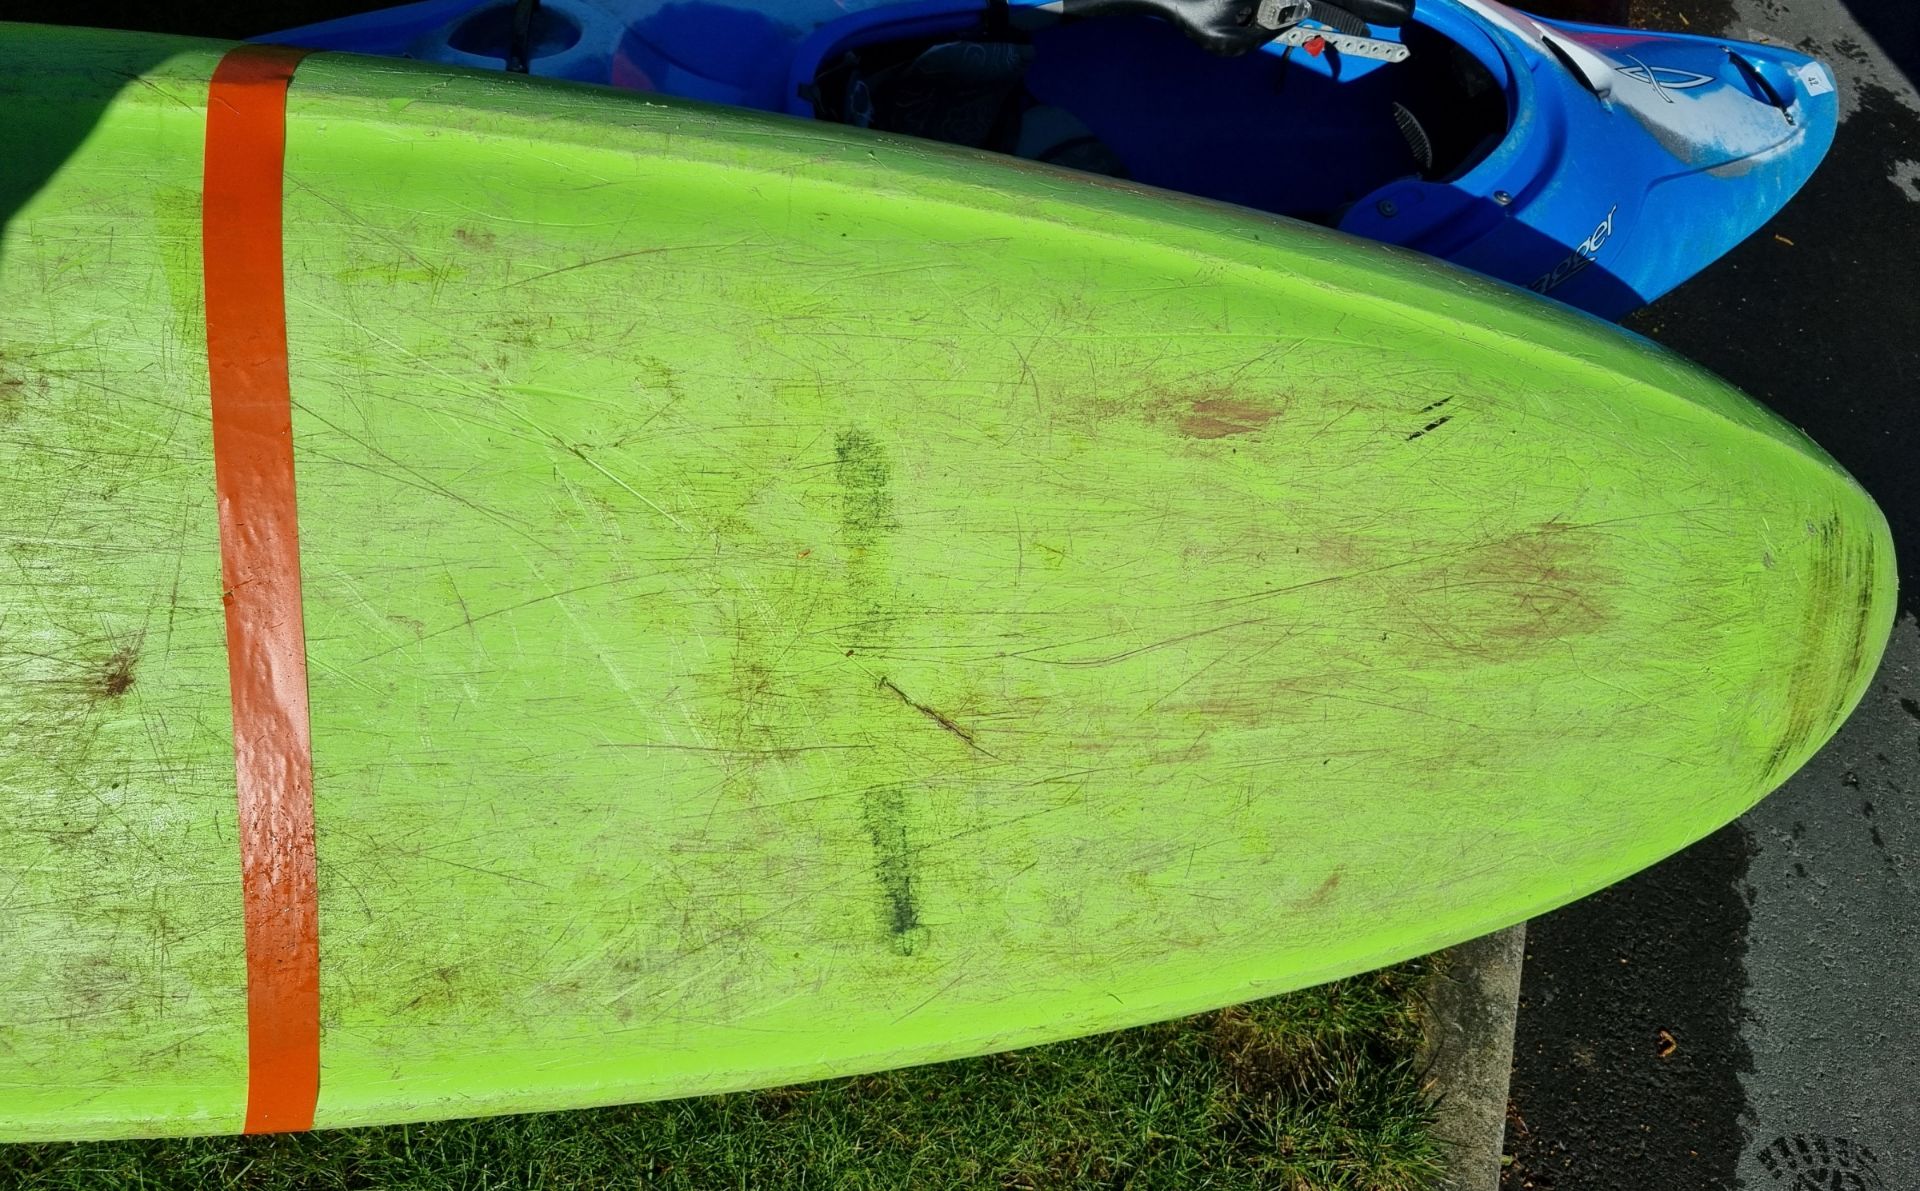 Dagger Mamba kayak/canoe - L260 x W70 x H40cm - Lime green - Image 7 of 7